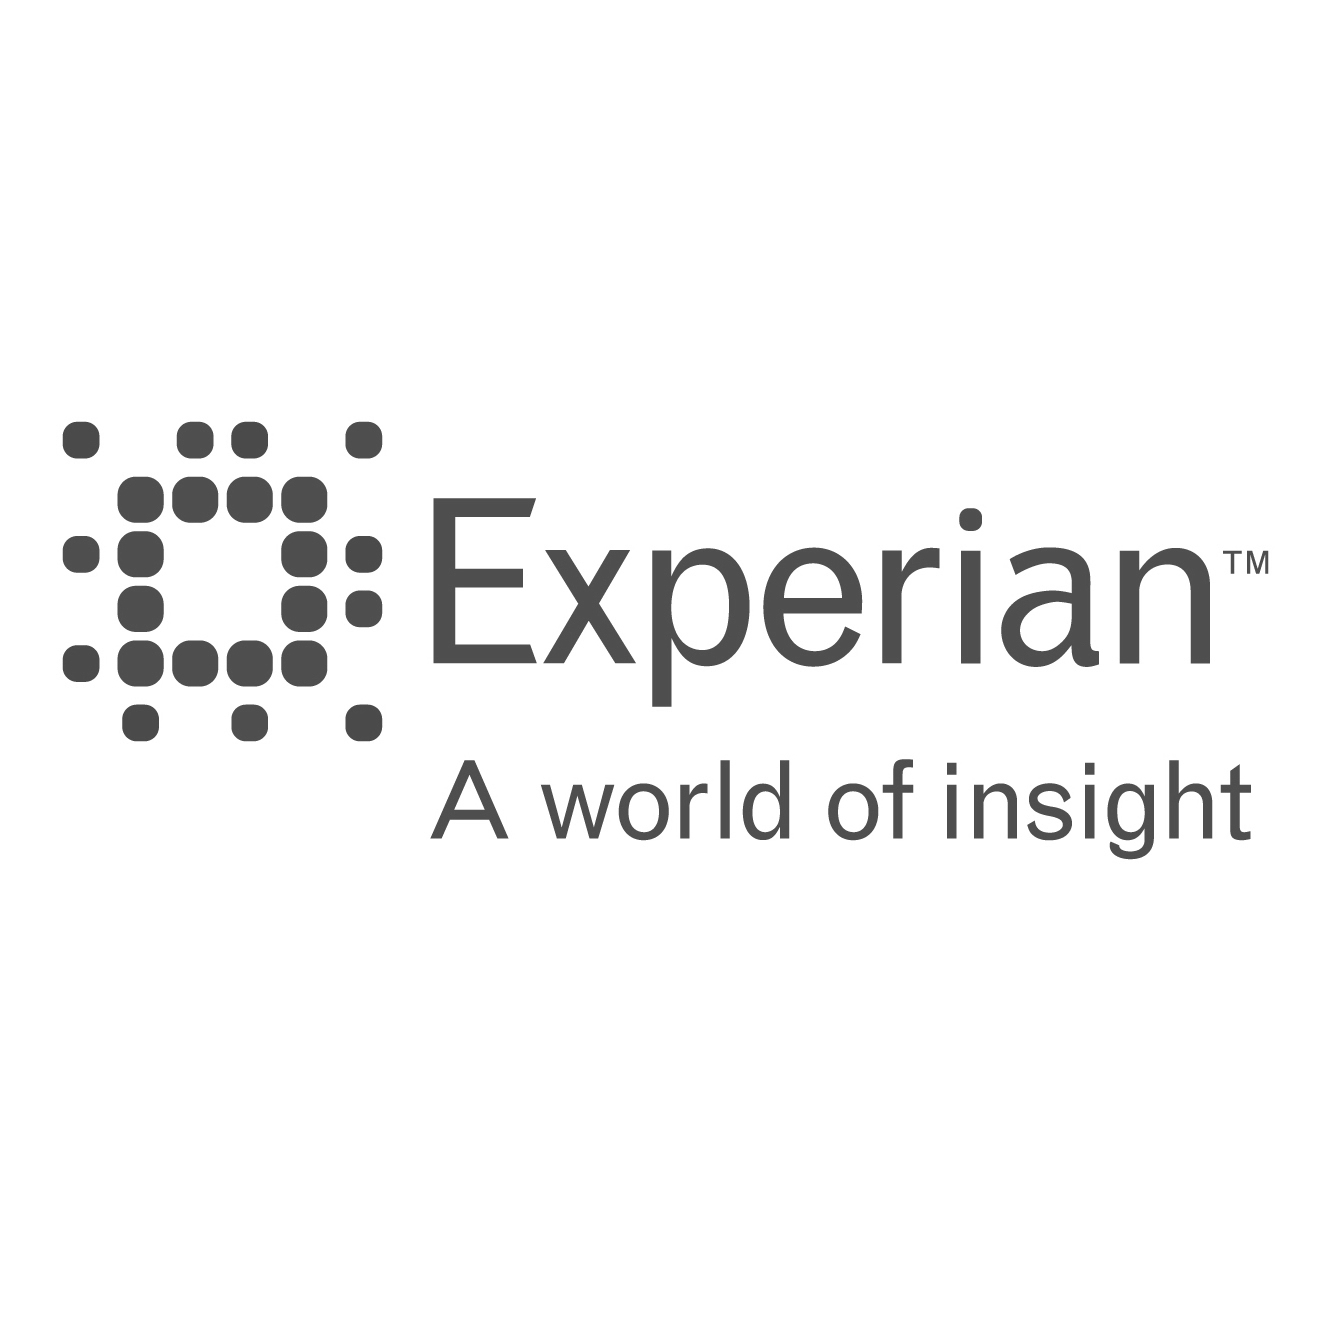 experian-logo_0 copy.jpg